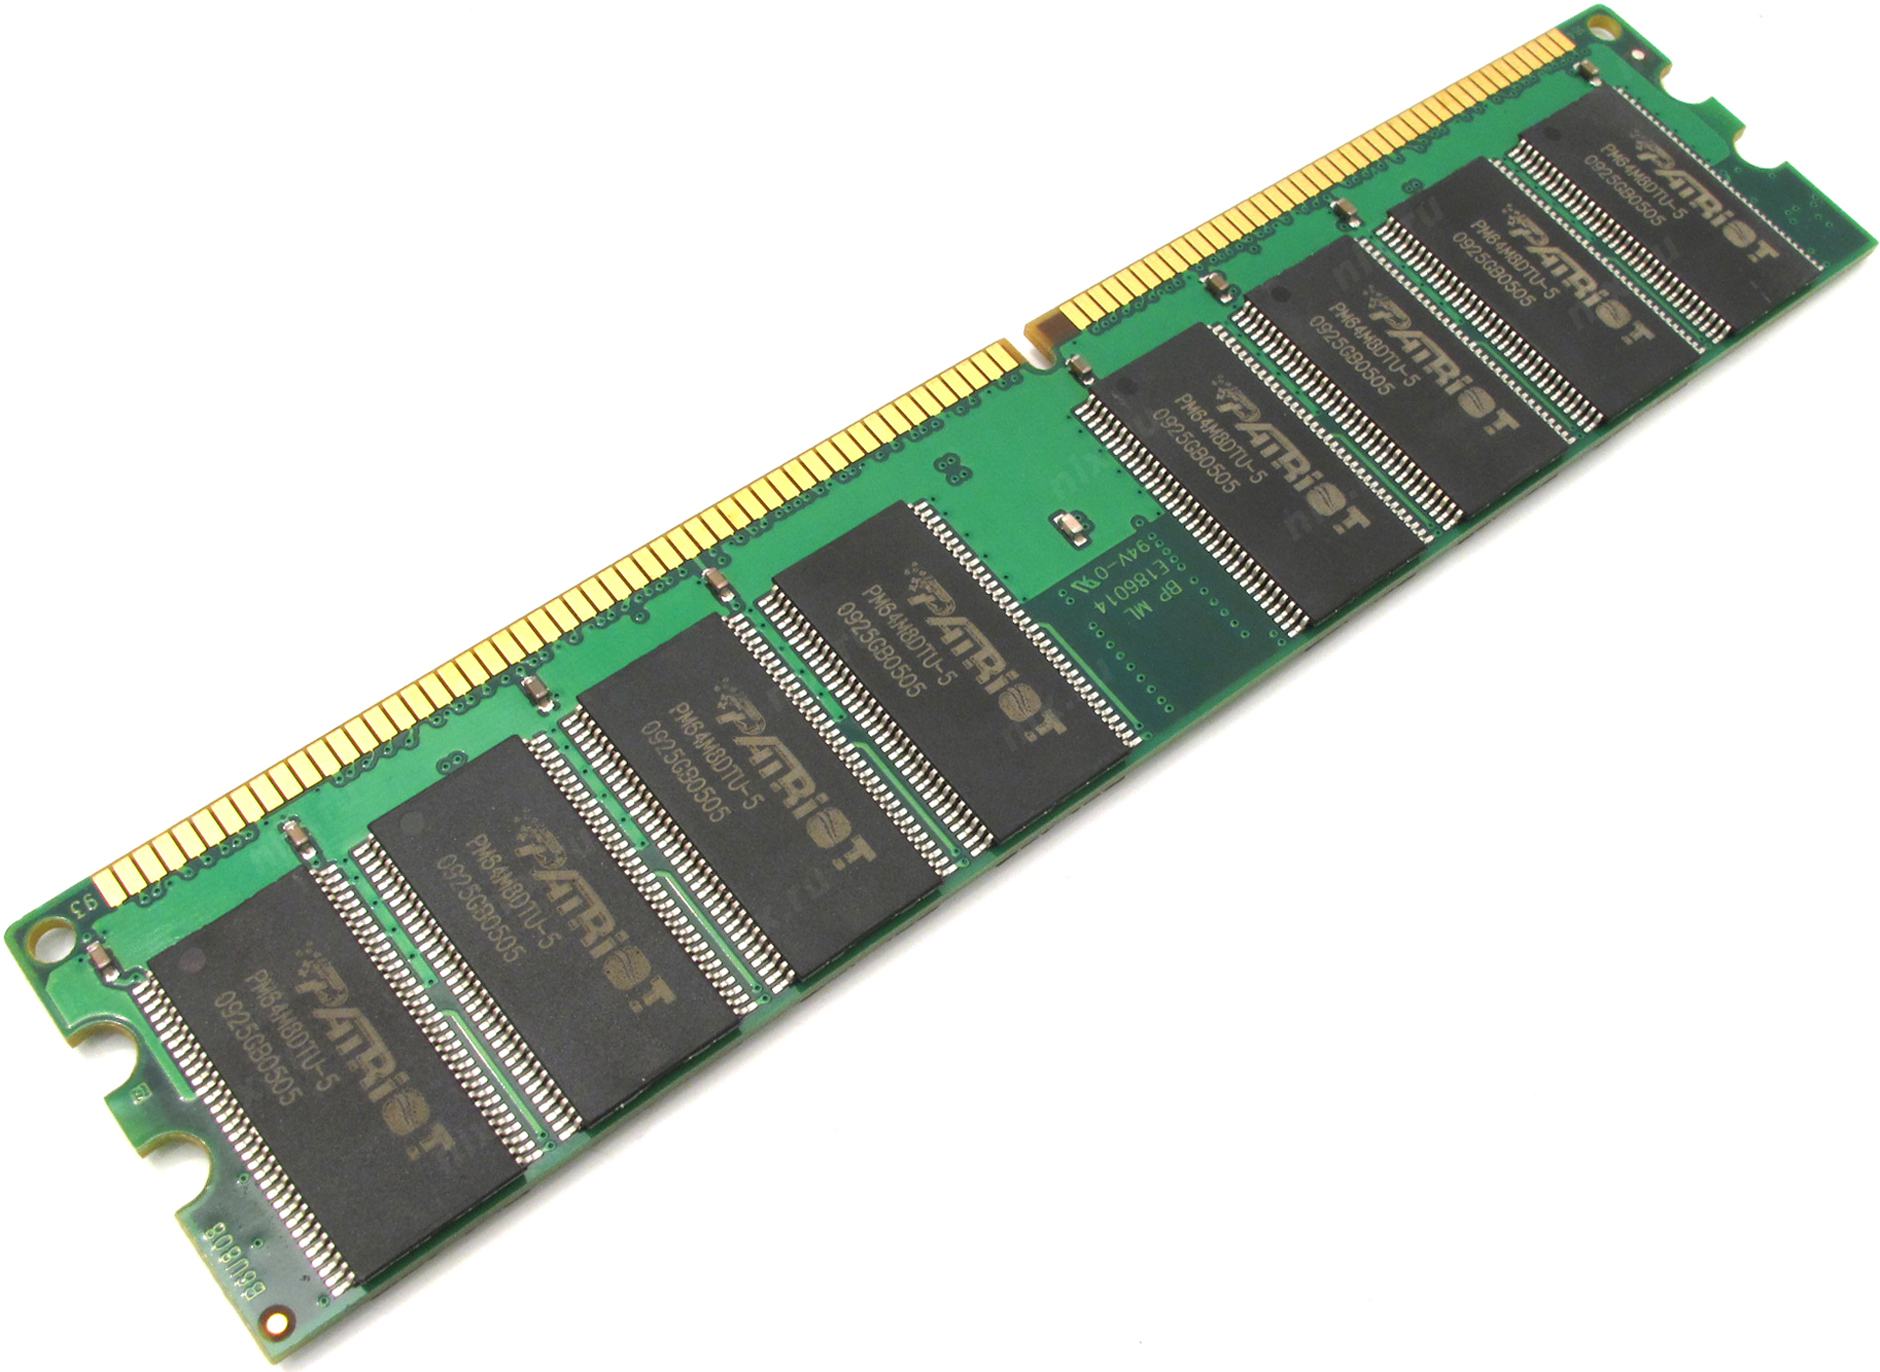 Sdram 3200. DDR DIMM 1 GB < pc3200 hyundavhynix. DDR SDRAM Patriot 1 GB. Twinmos m2gaj08a-MK, 512mb, DDR-DIMM pc3200(cl3). Patriot psd1g400 1gb pc3200 cl3.